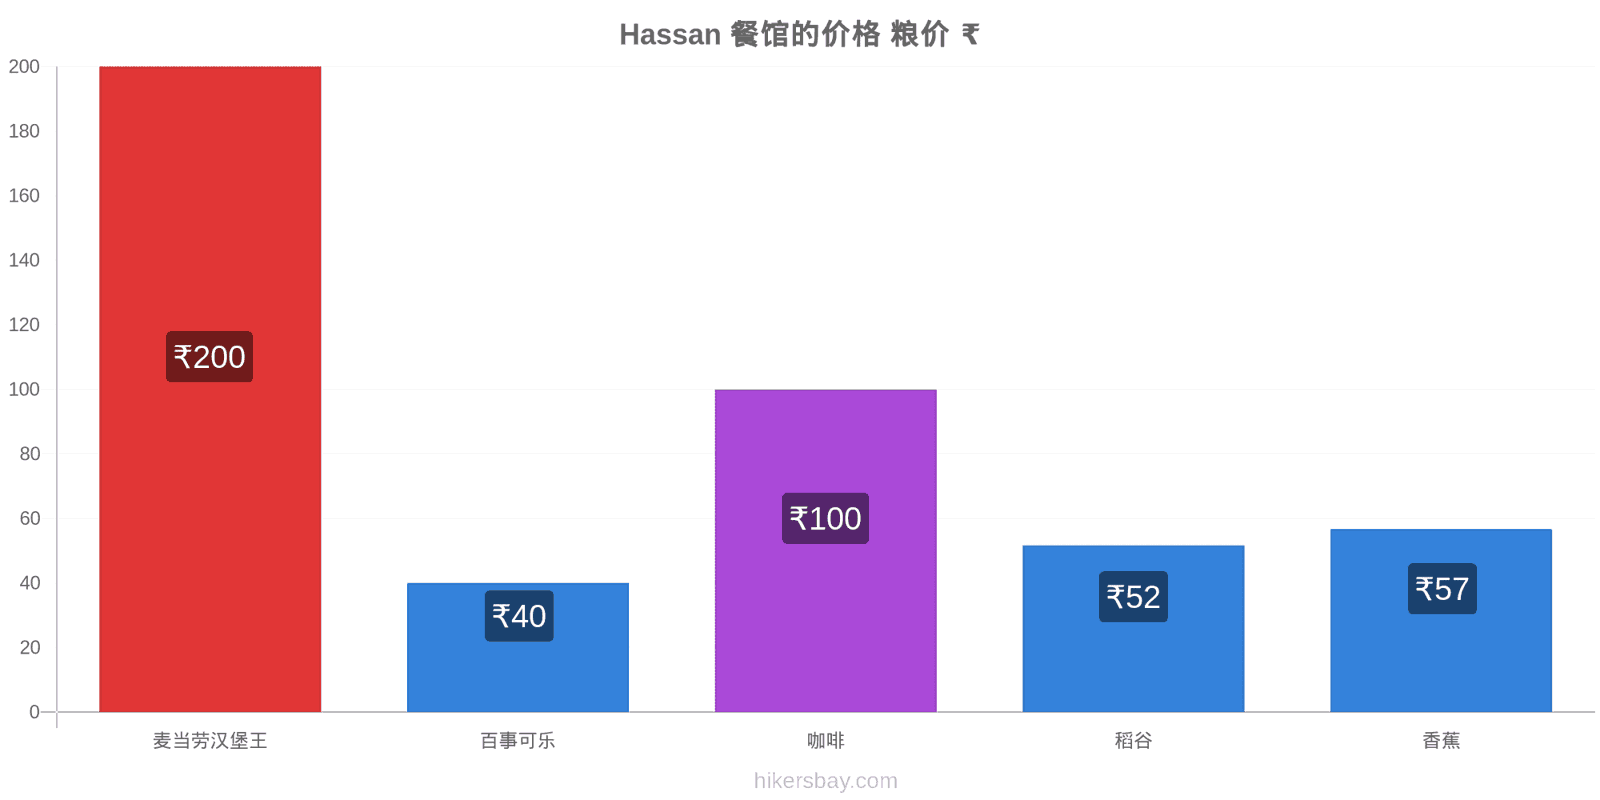 Hassan 价格变动 hikersbay.com